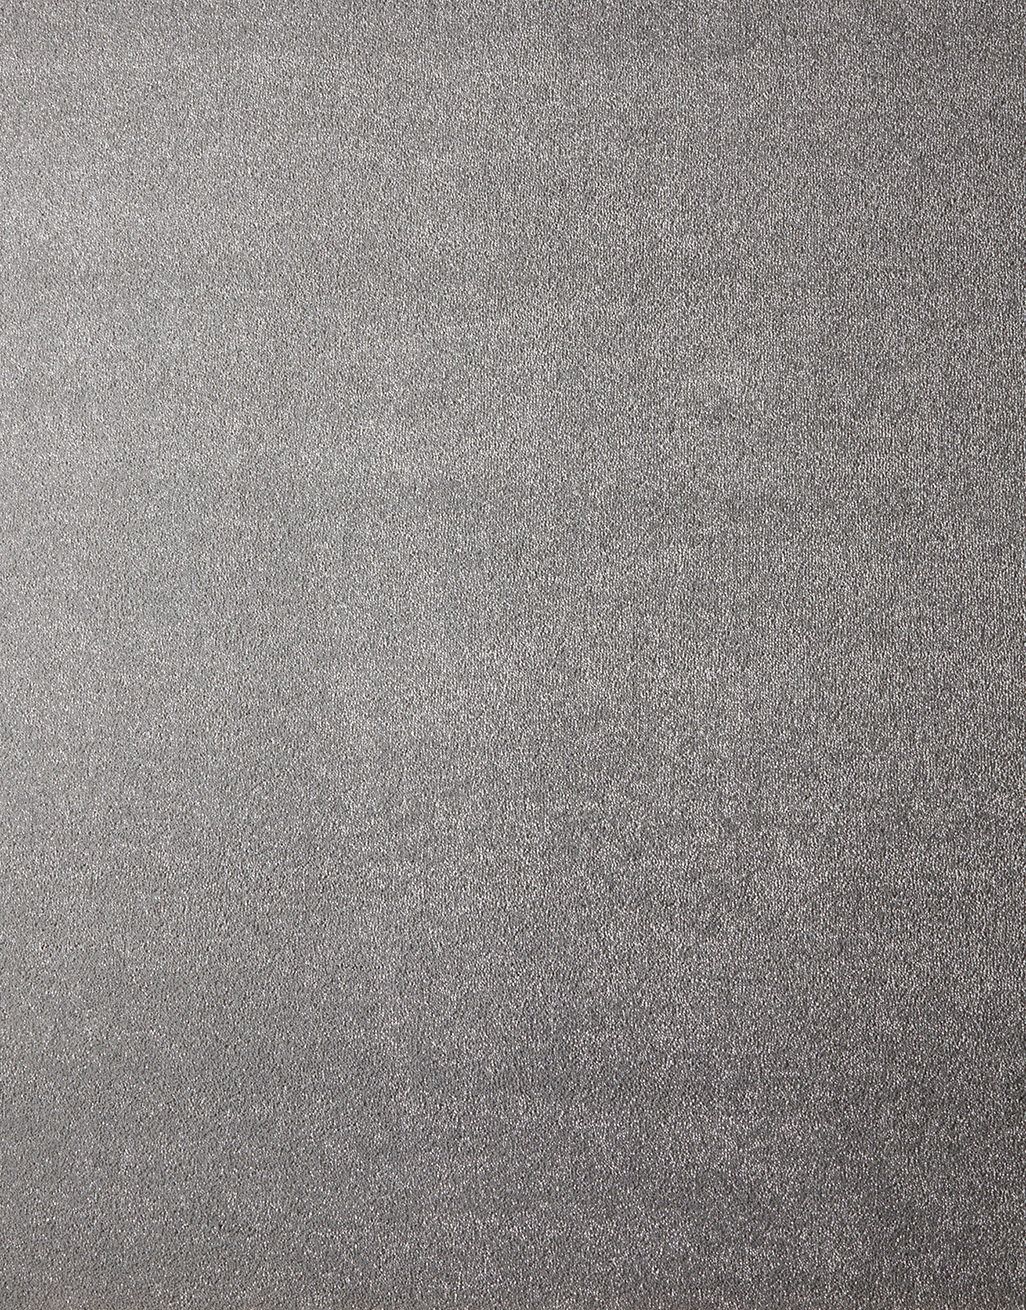 Cormar Sensations - Shale Grey - 5 Metres [5.75m x 5m] 1